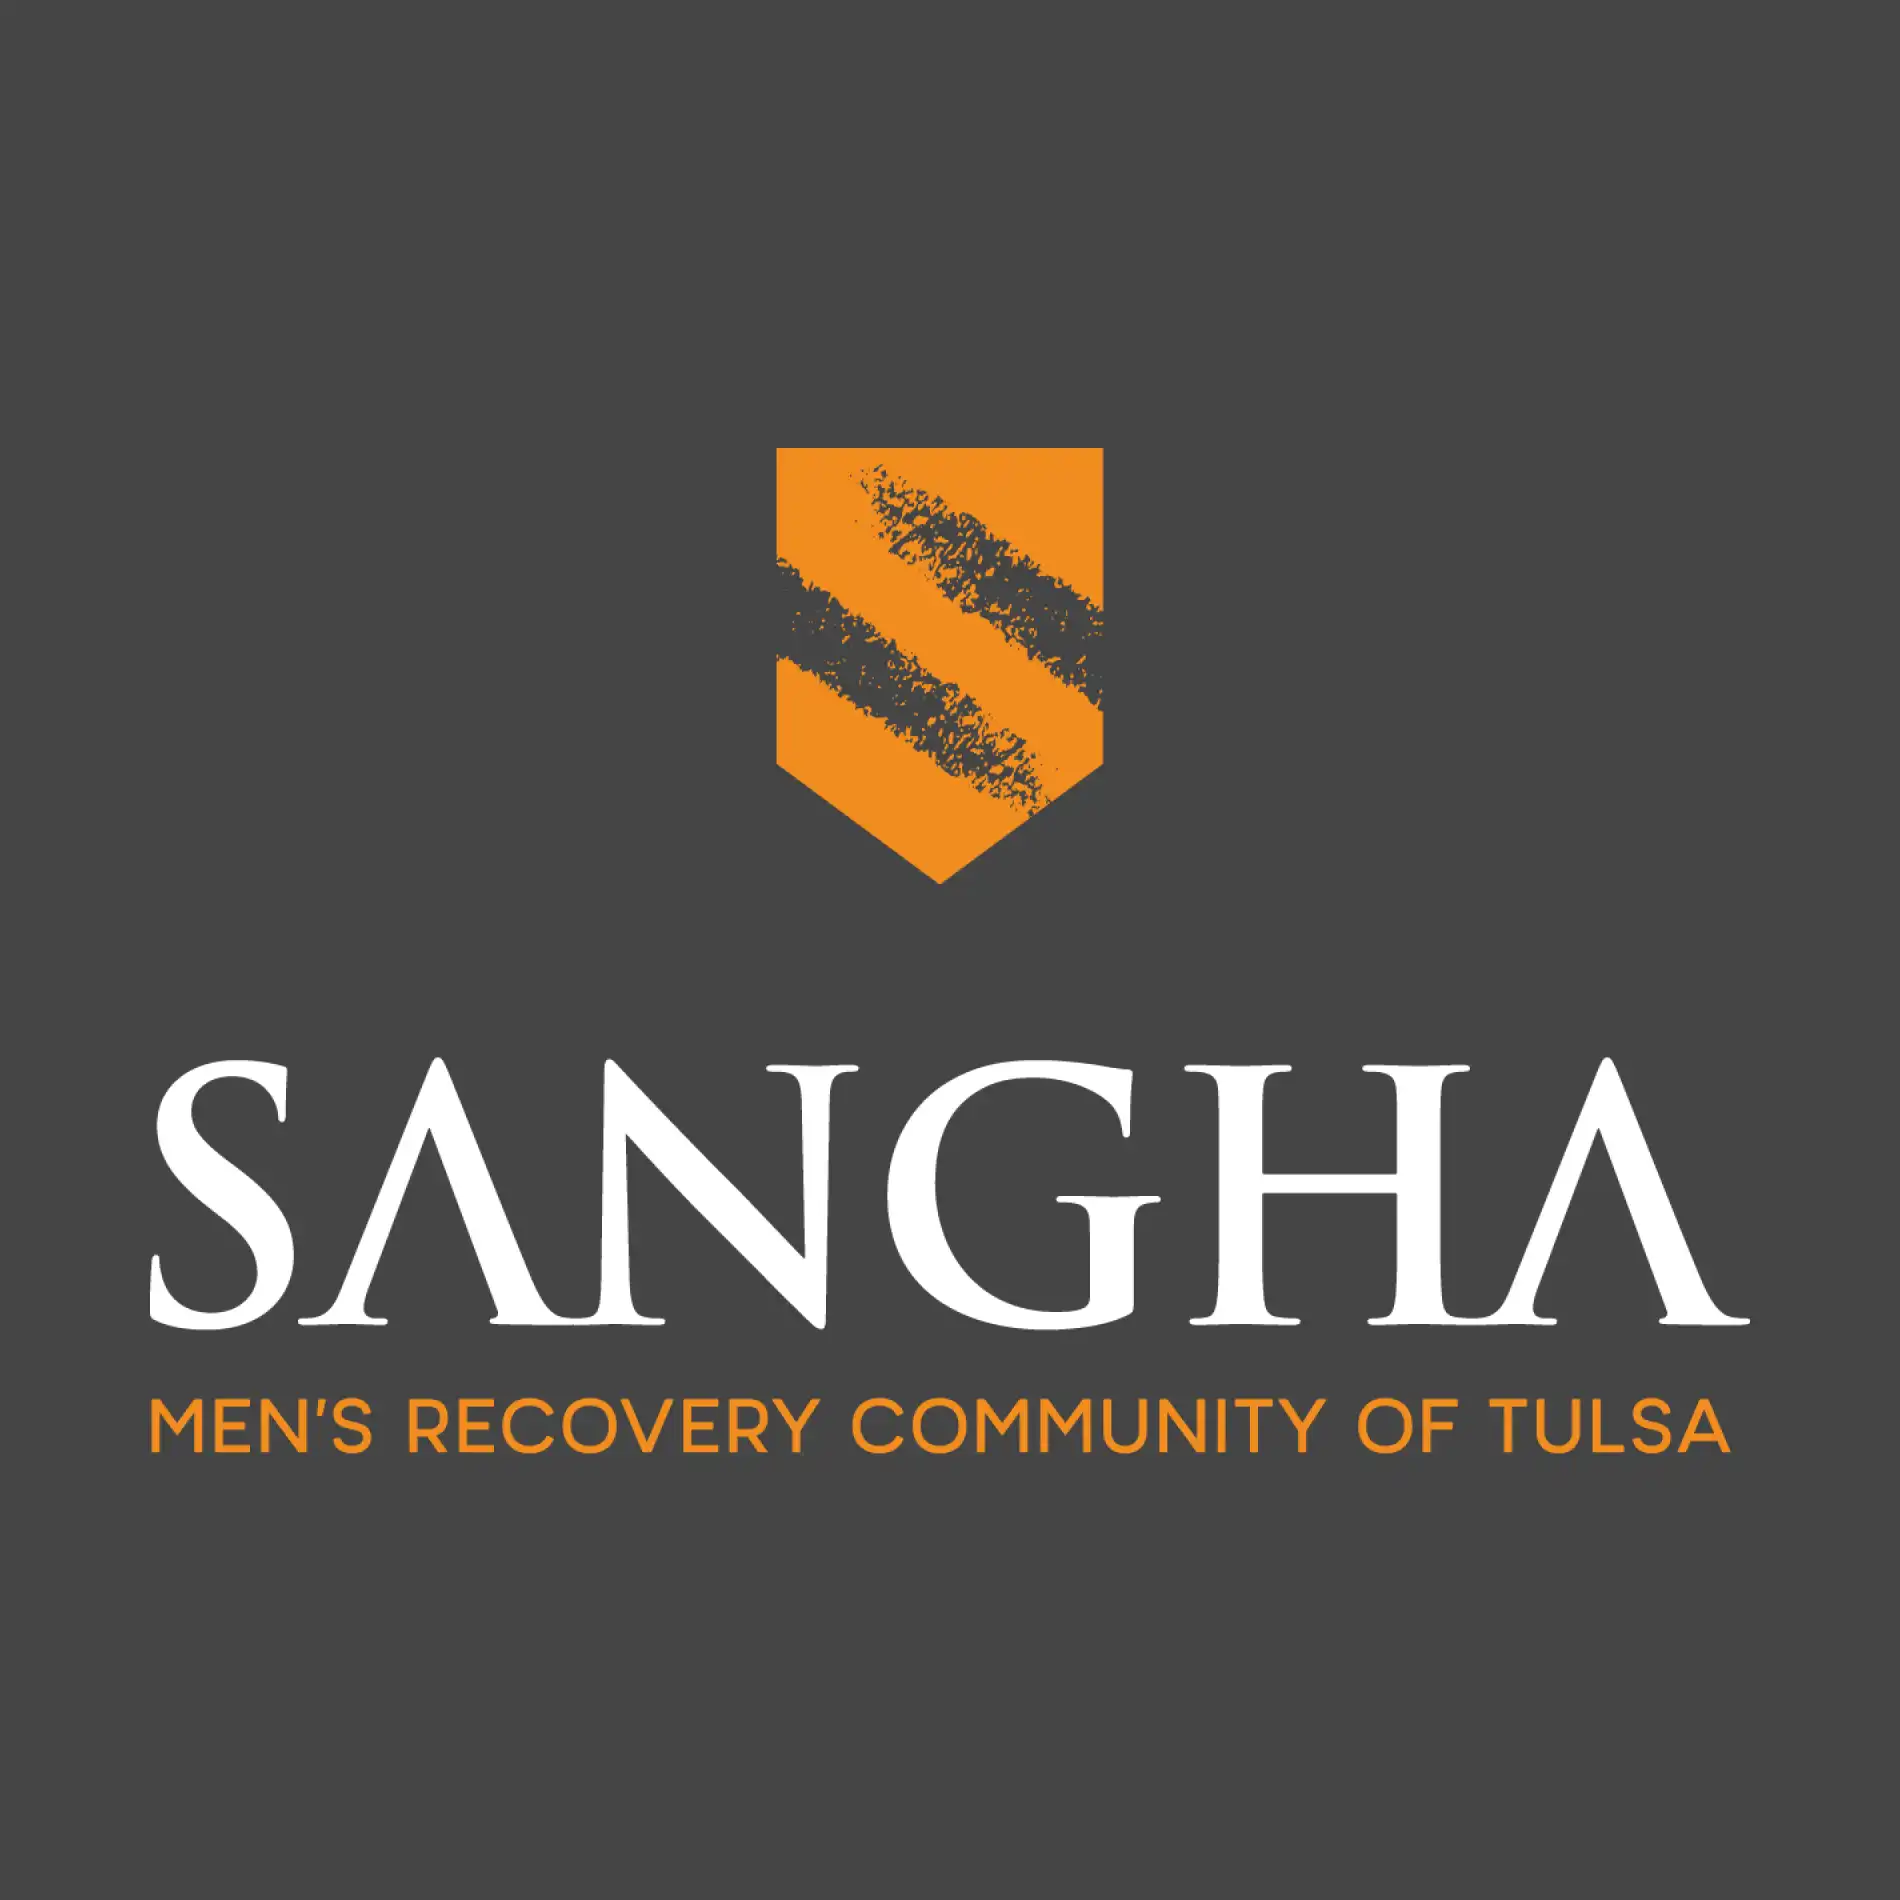 Sangha Men's Recovery Community of Tulsa logo designed by AcrobatAnt.